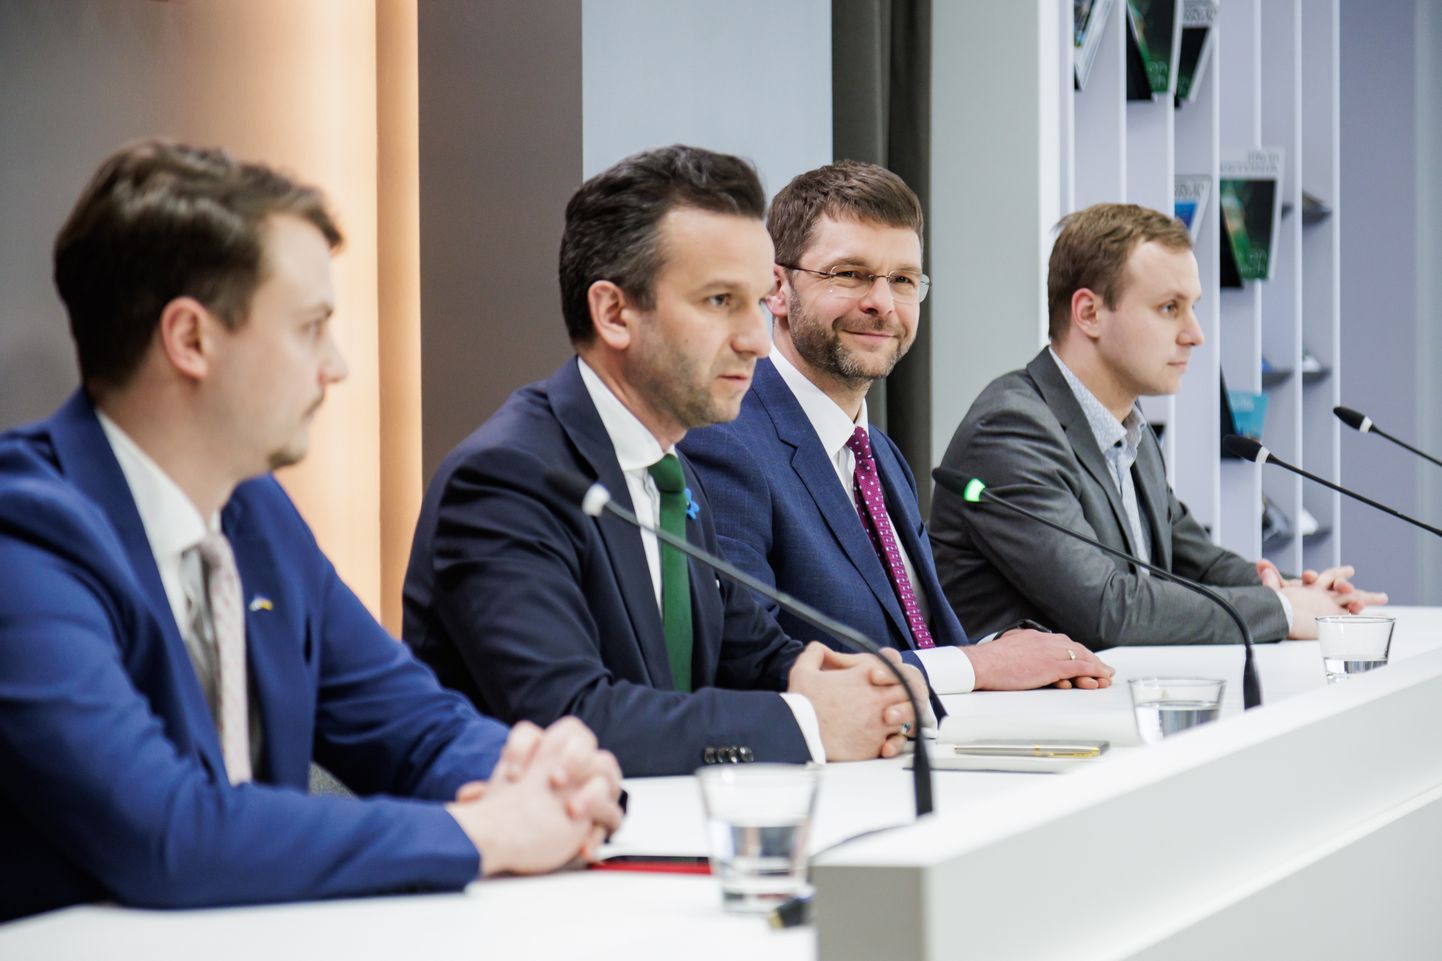 First press conference of Tallinn's new city government. From left, Andrei Jašin, Pärtel-Peeter Pere, Jevgeni Ossinovski, Karl Sander Kase.